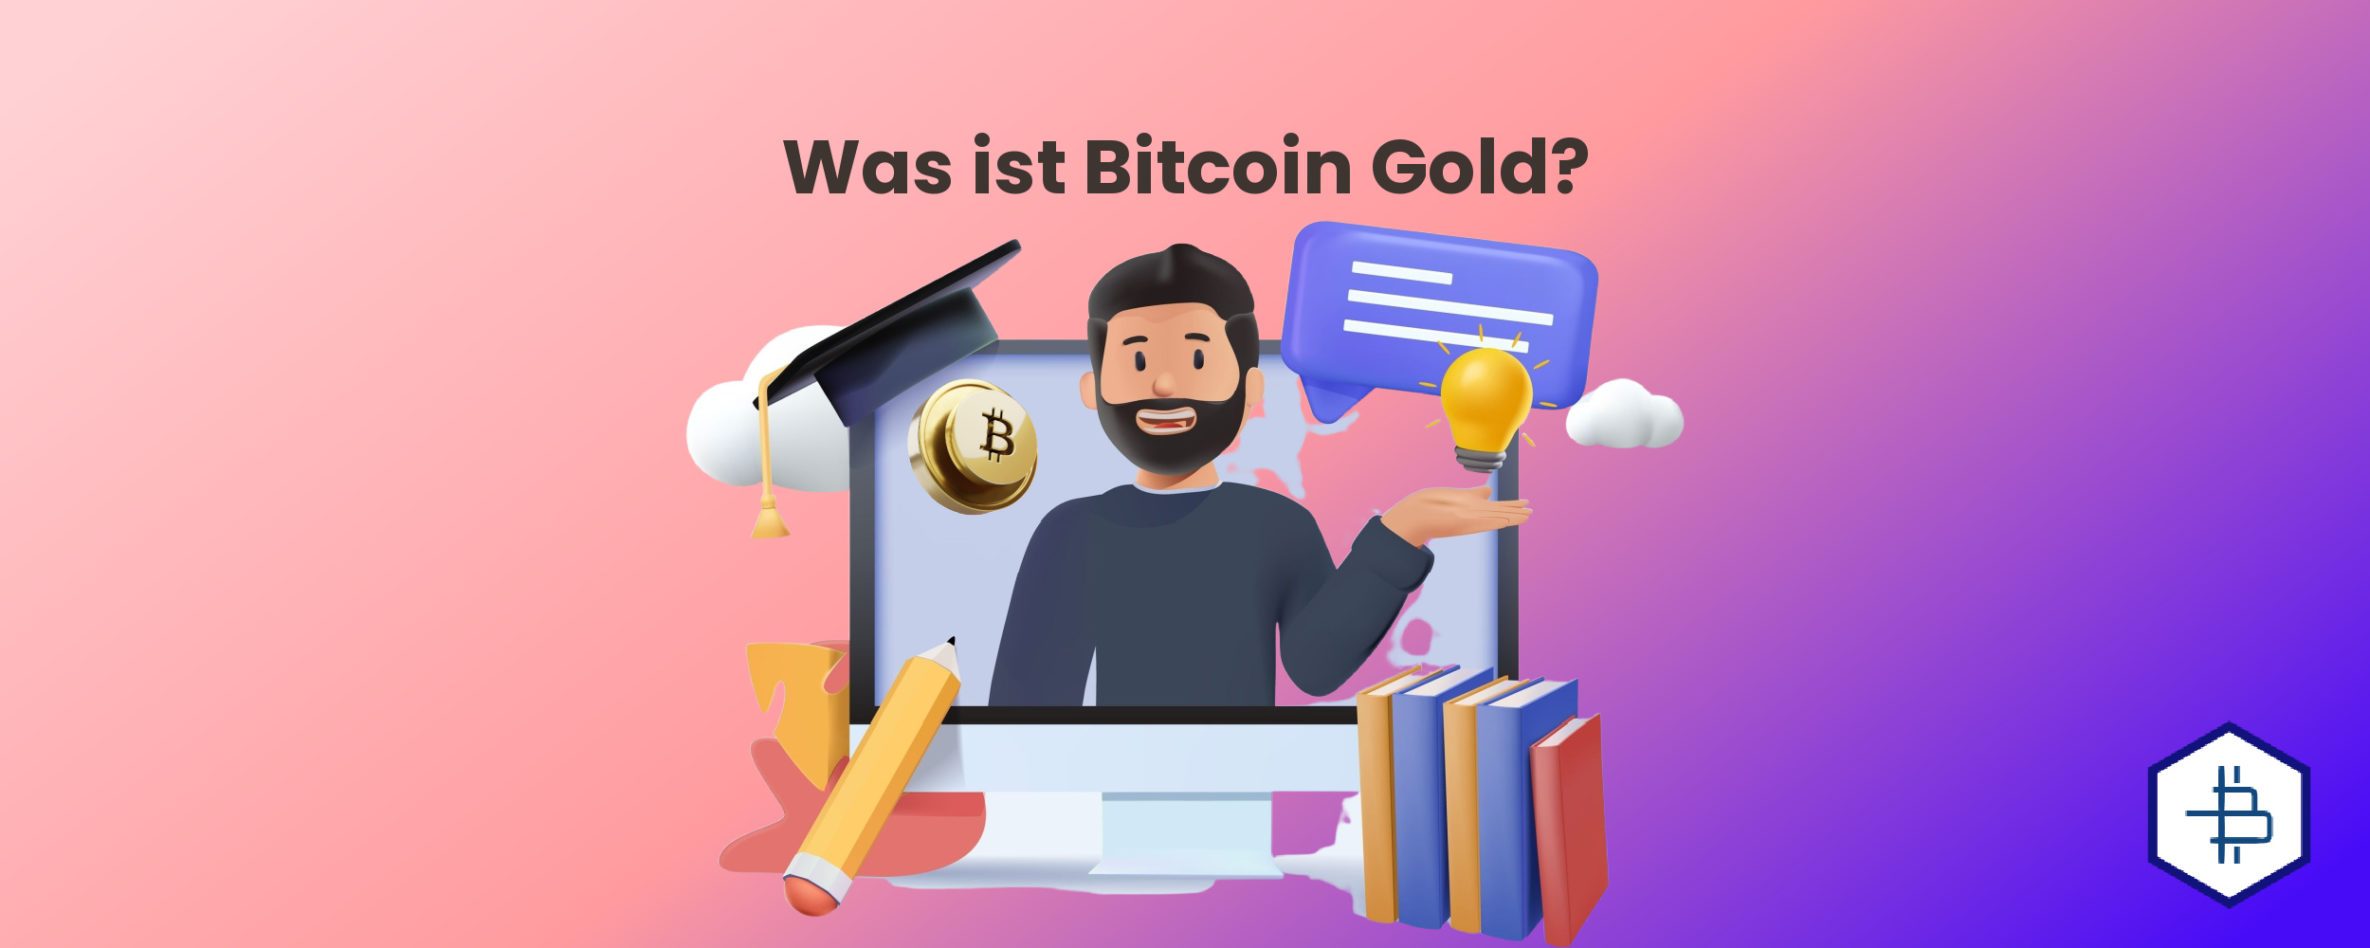 Was ist Bitcoin Gold